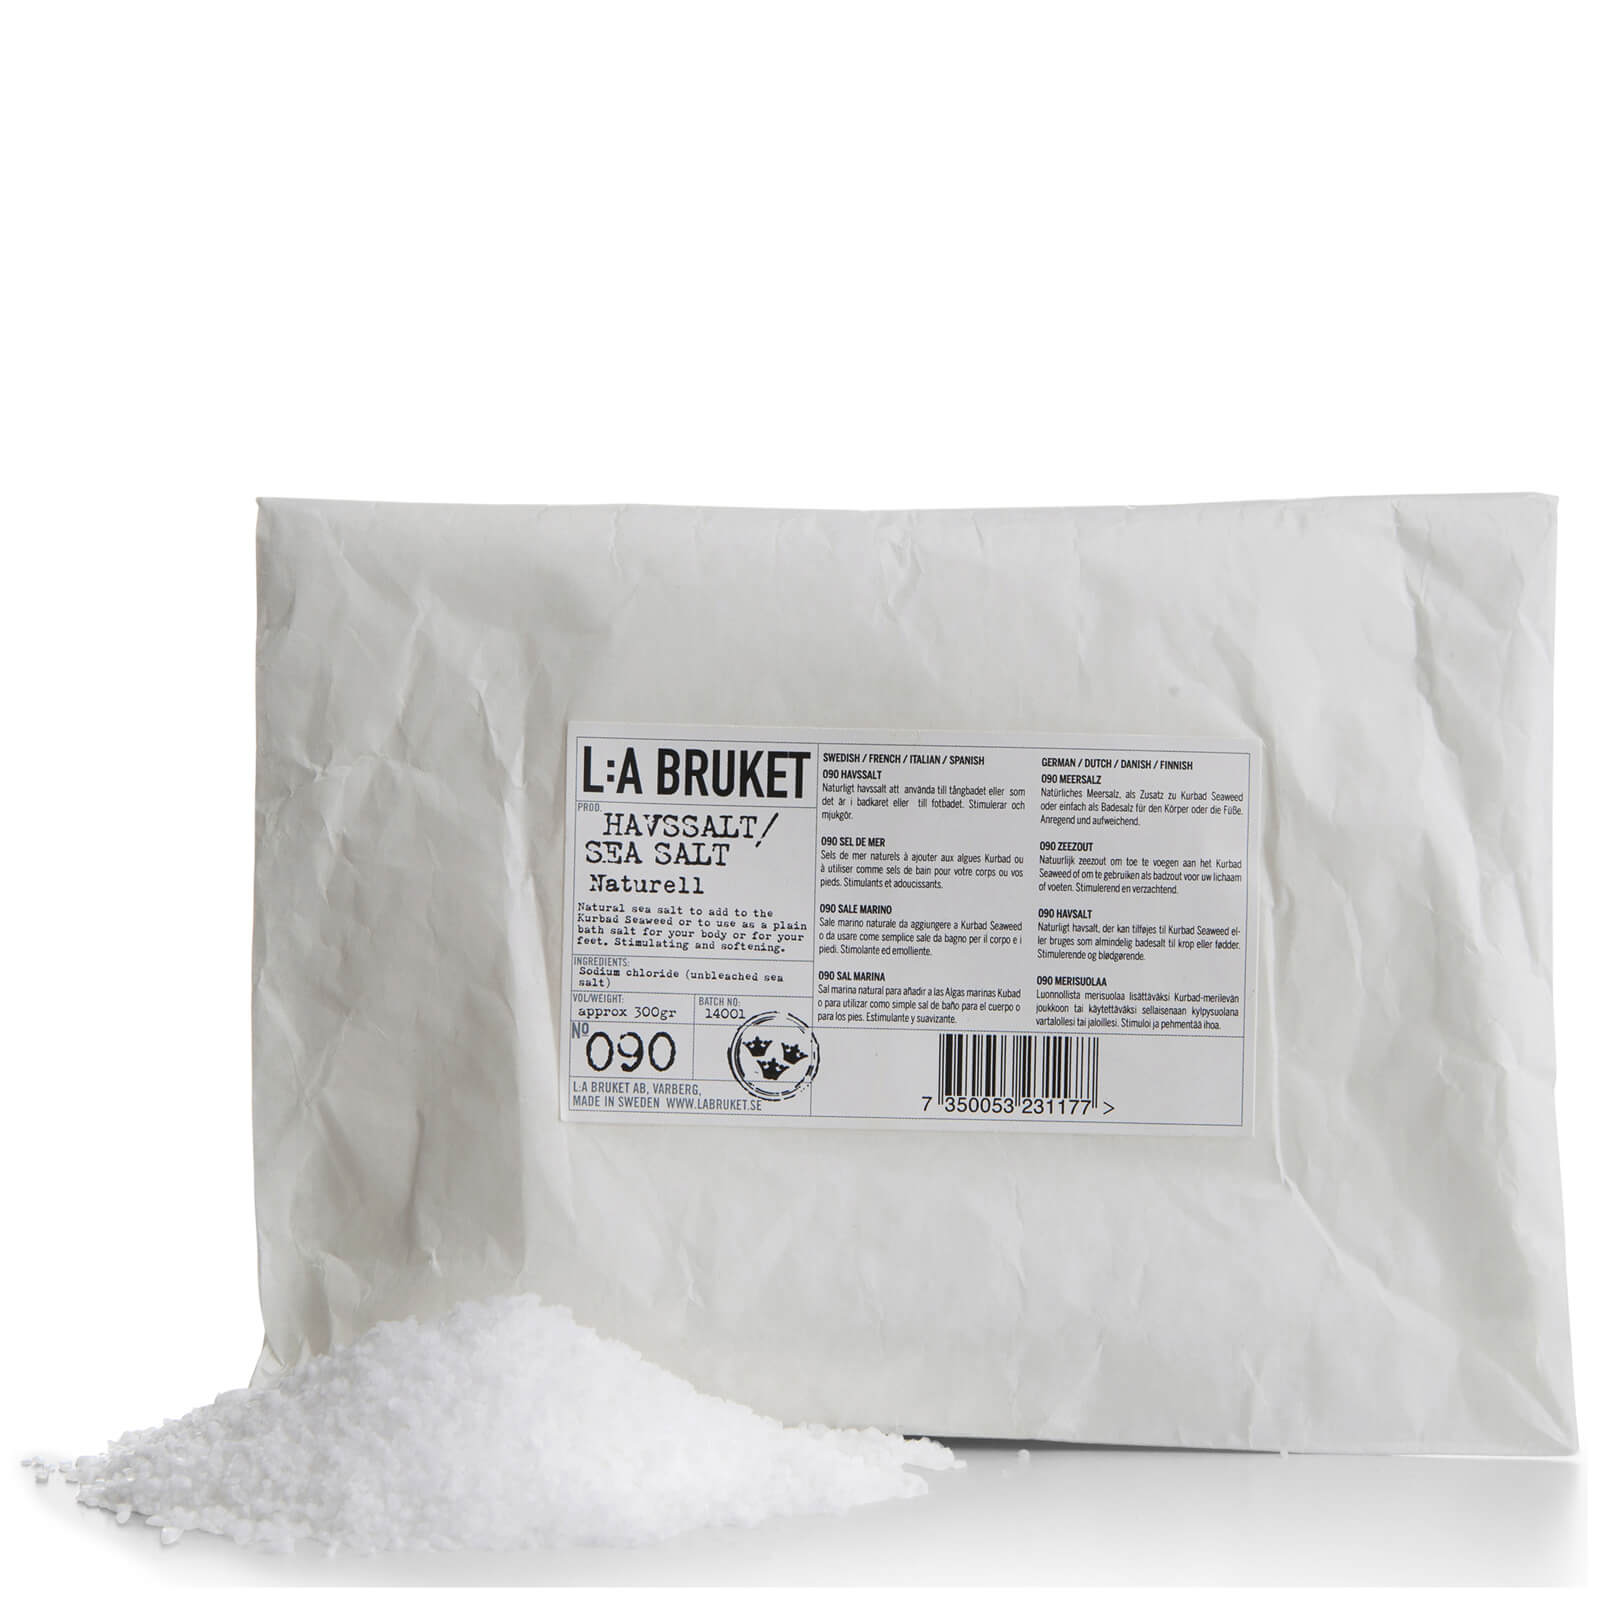 L:A BRUKET No. 090 Sea Salt Bath Salt 300g